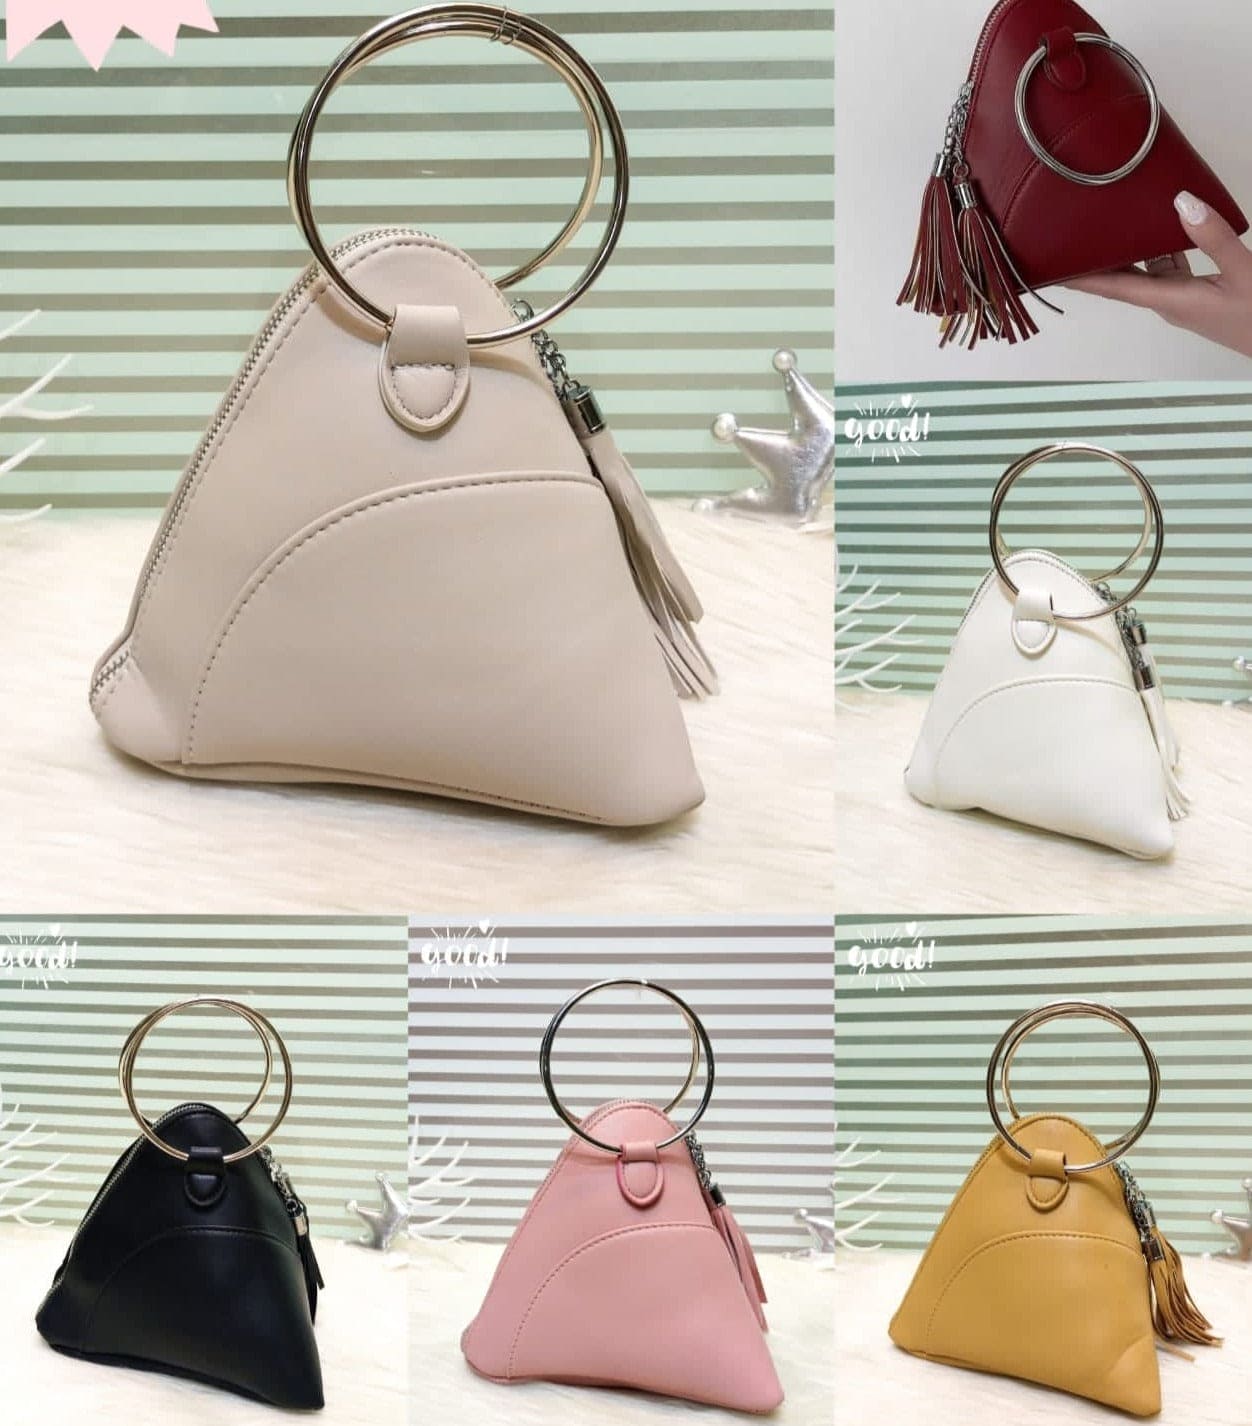 New Metal Handle Triangle Tassel Women Wrist Handbags, New Tassel Zipper Shoulder Bag For Women, Round Handle Women Handbags, Leather Wrist Clutch Bag